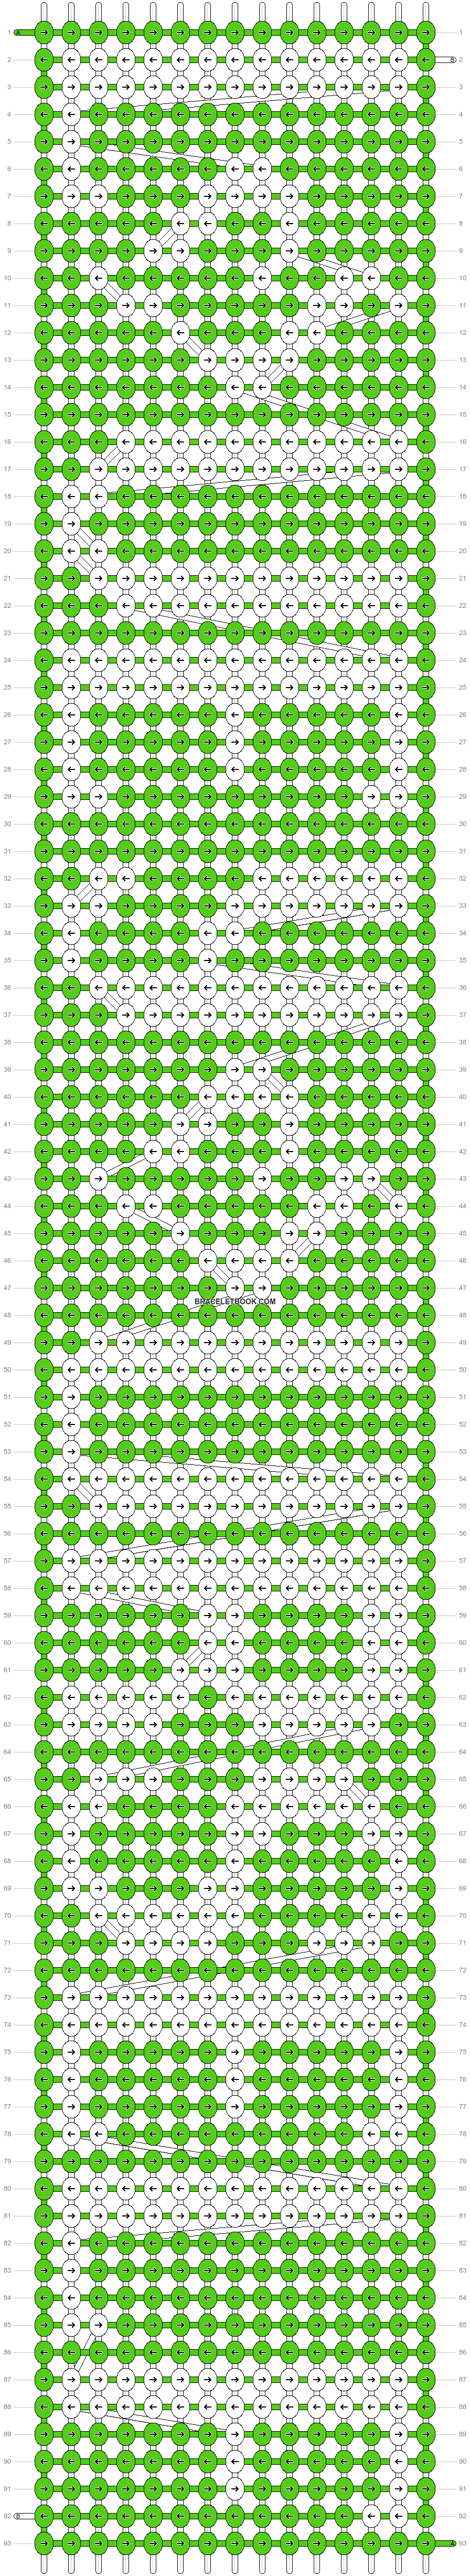 Alpha pattern #31283 variation #20293 pattern